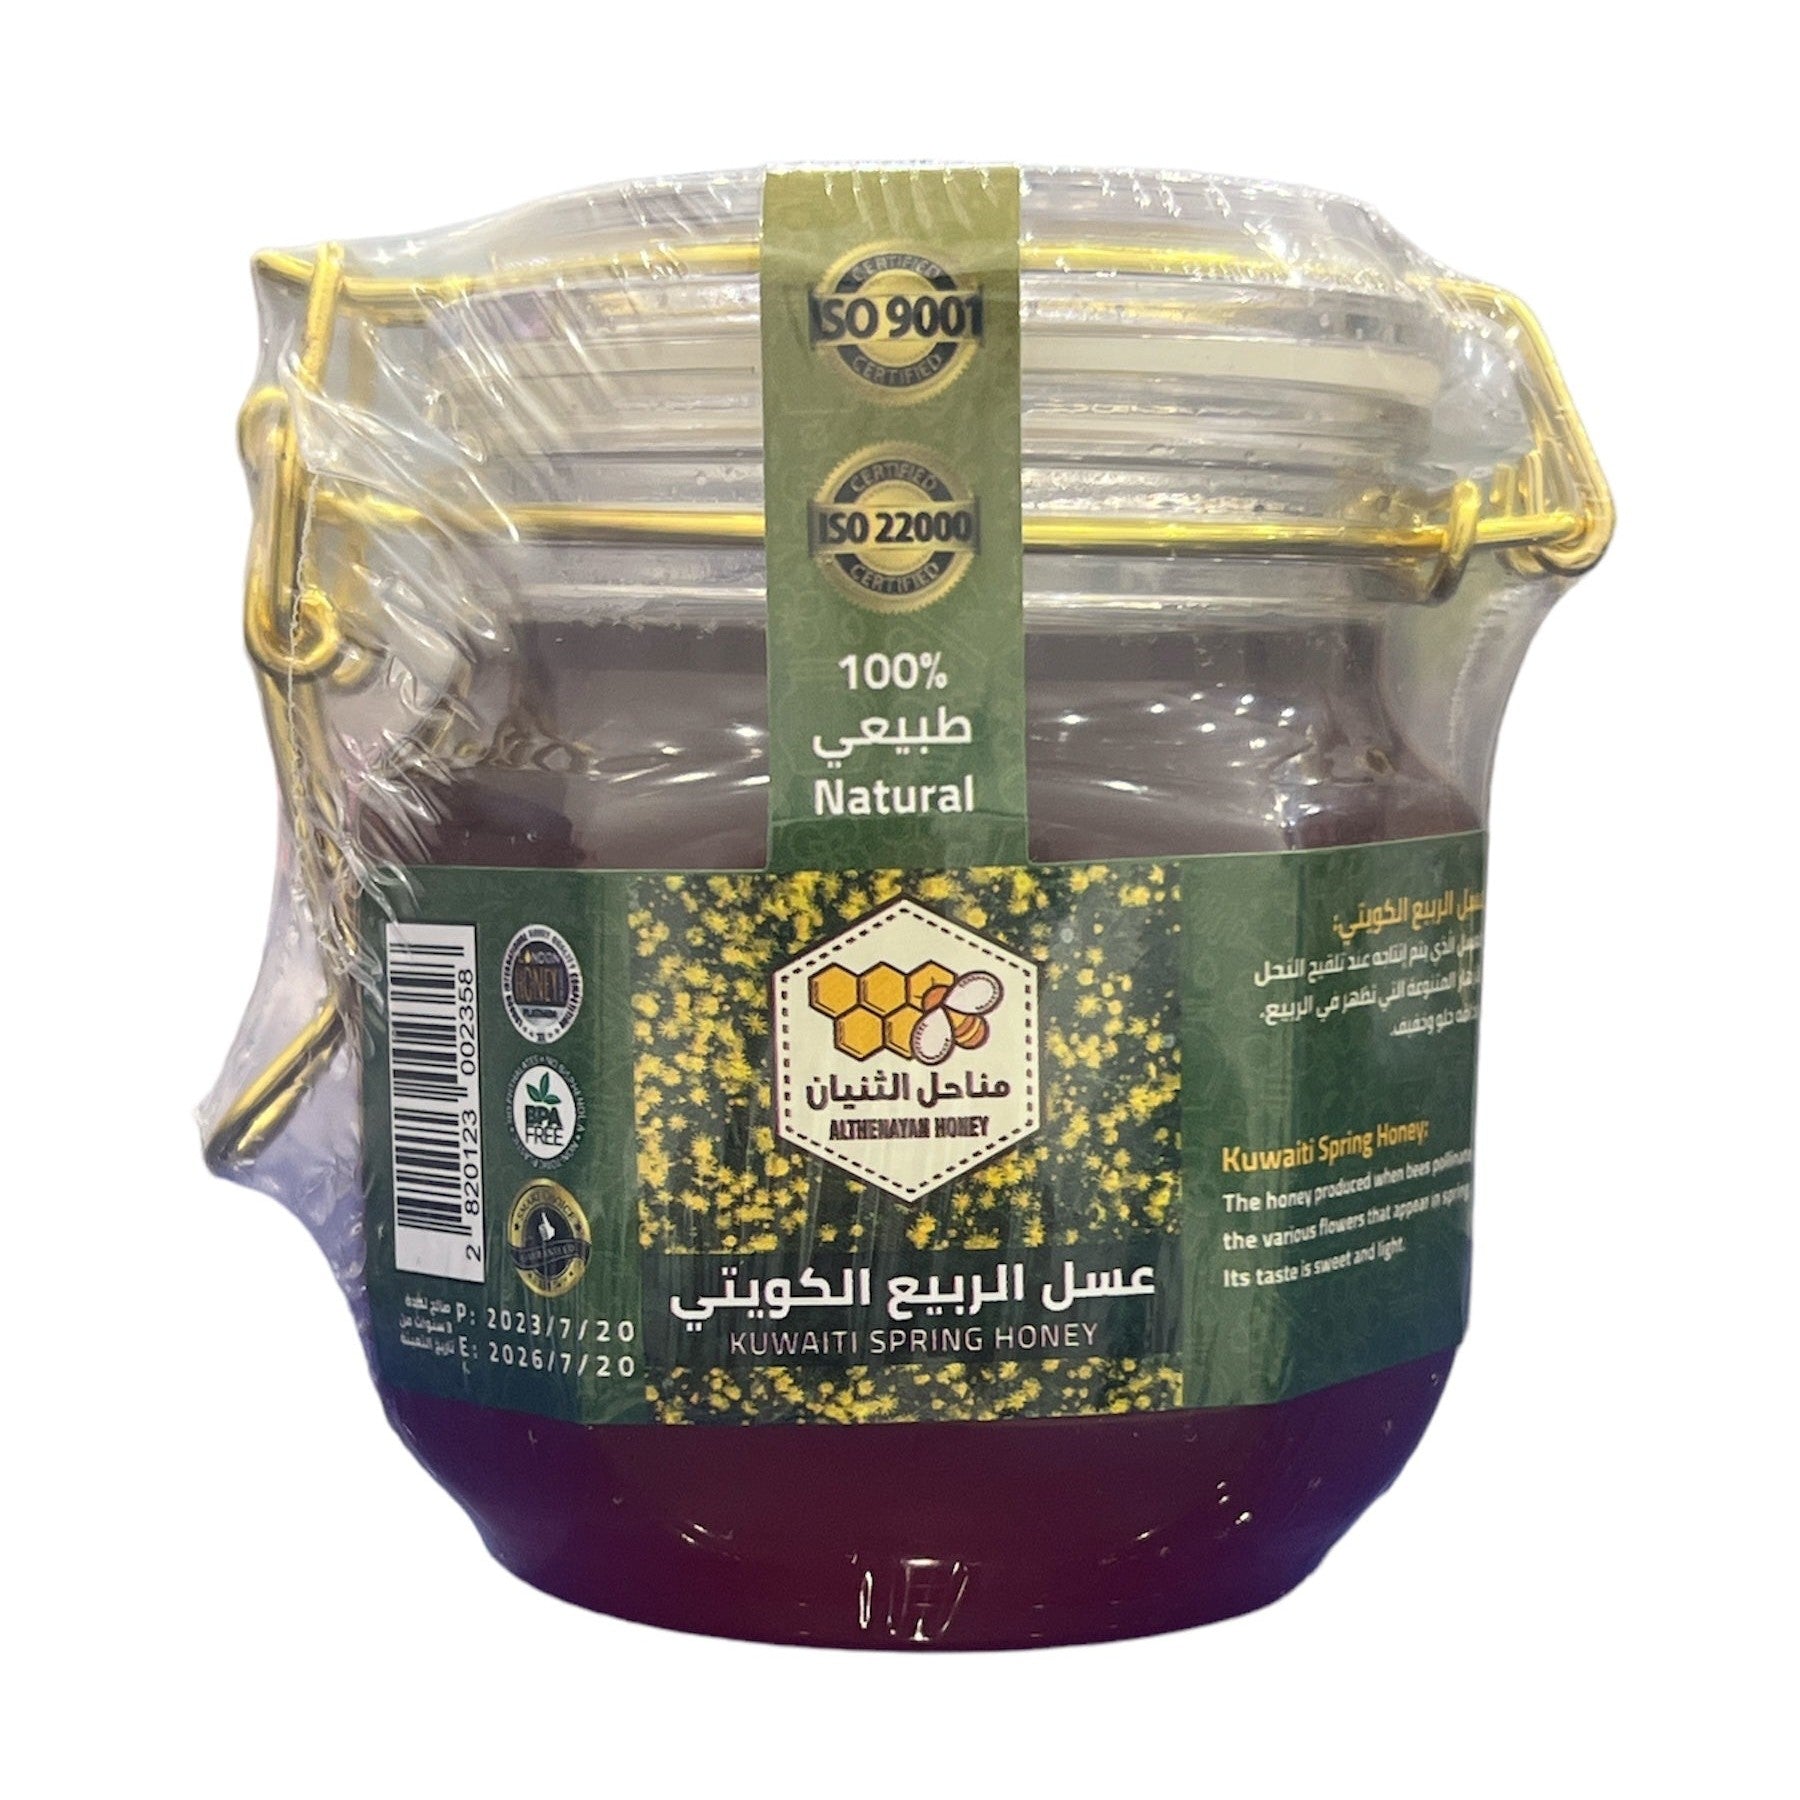 Althunayan Farms Kuwaiti Spring Honey 500g